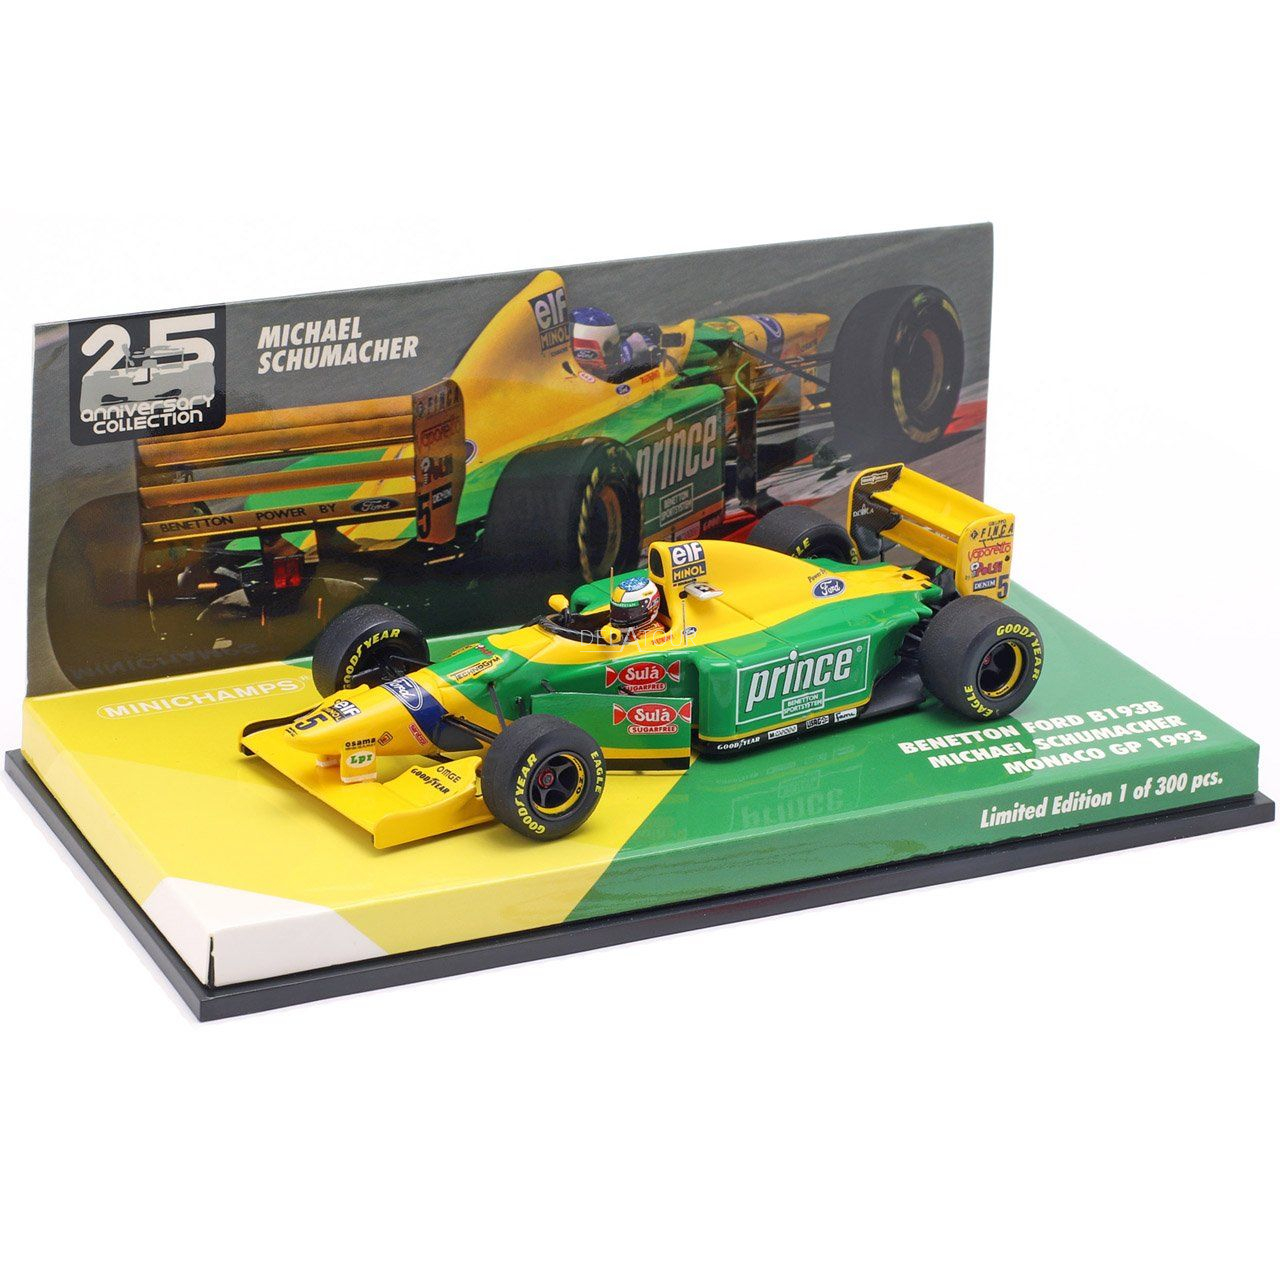 Benetton B193 #5 M. Schumacher Monaco GP 130688 Minichamps